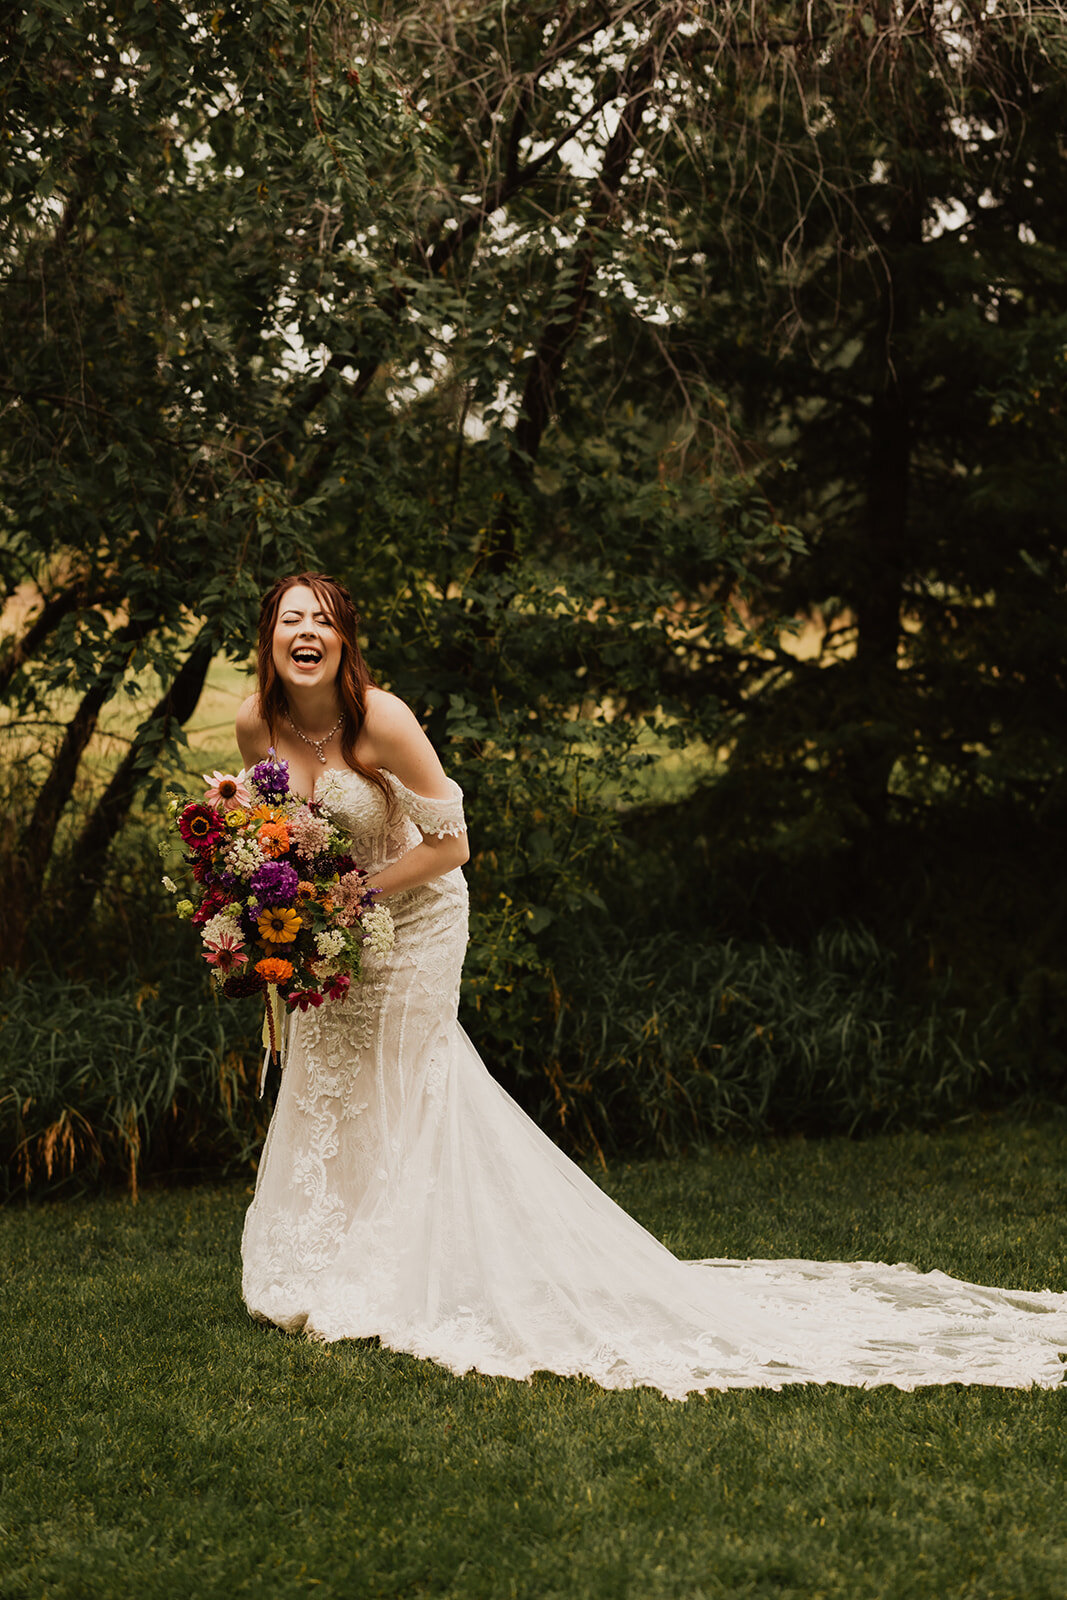 Jessica-Rae-Schulz-Edmonton-Alberta-Elopement-Wedding-Photographer-Love-Emotive-Candid-Connection-10